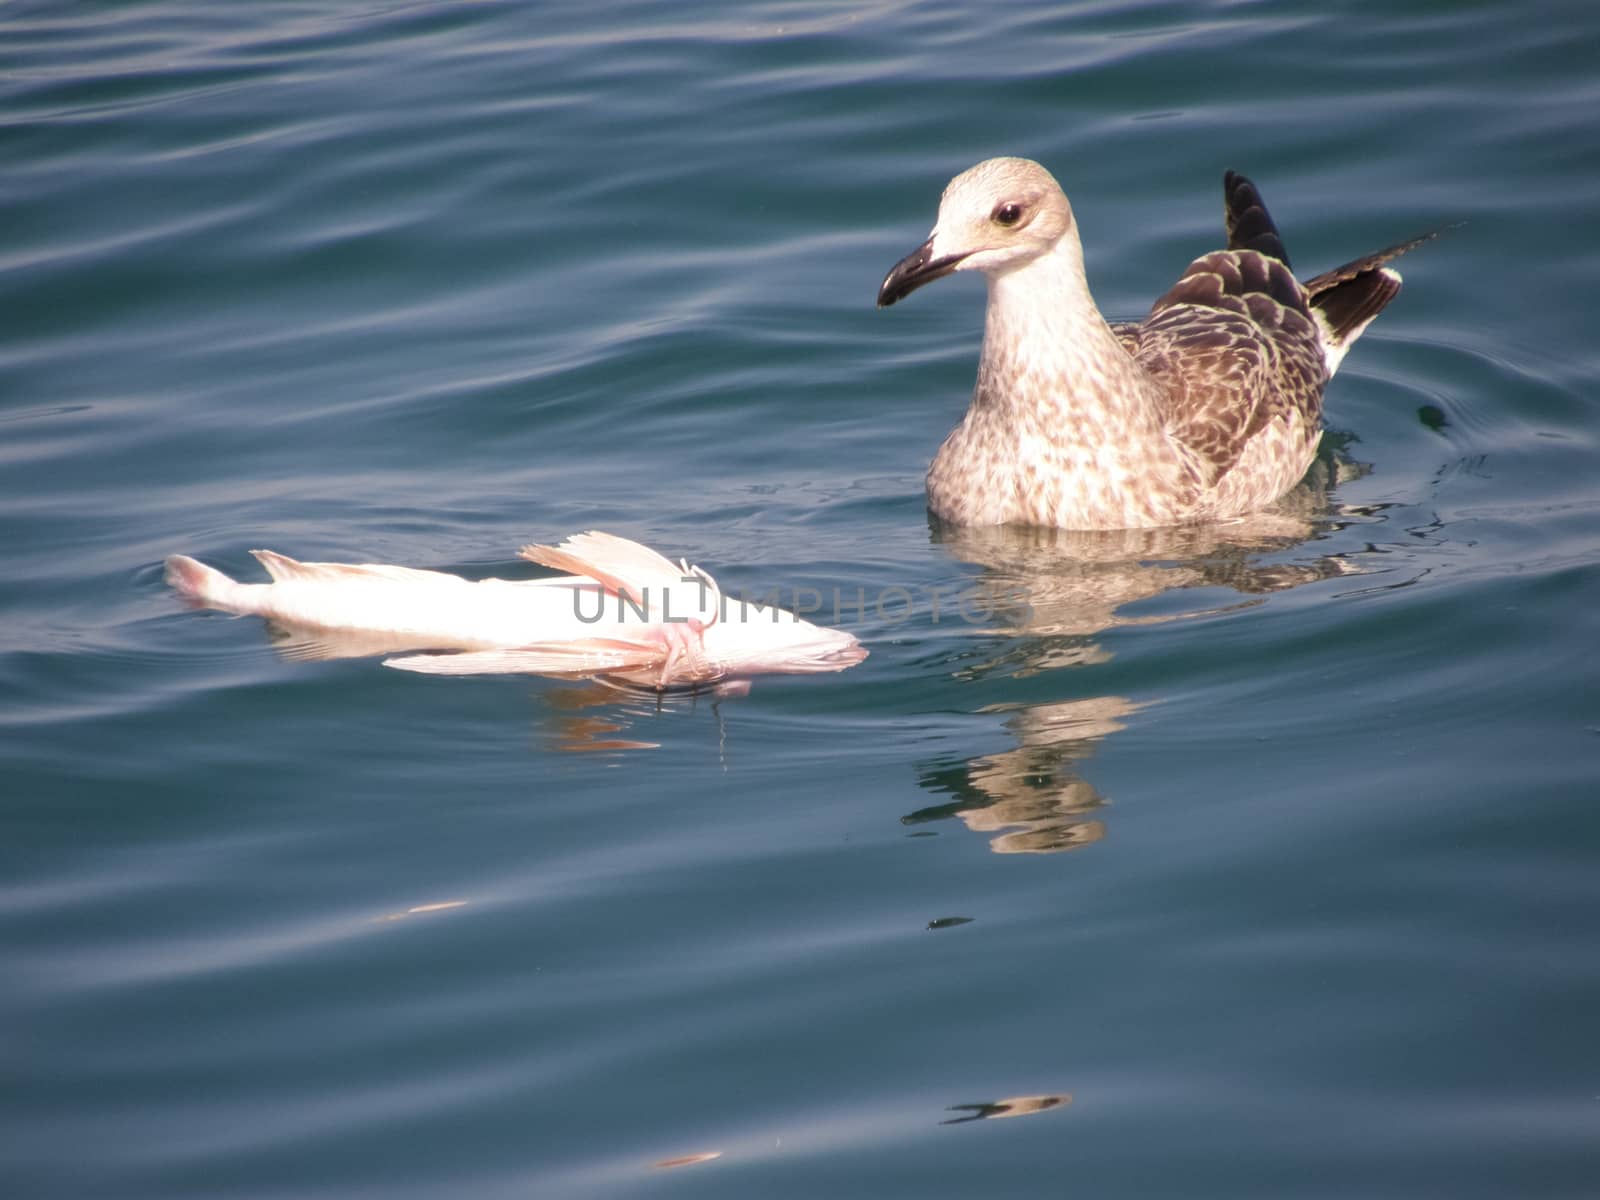 A seagull eats dead fish. Feeding seagulls in the sea.